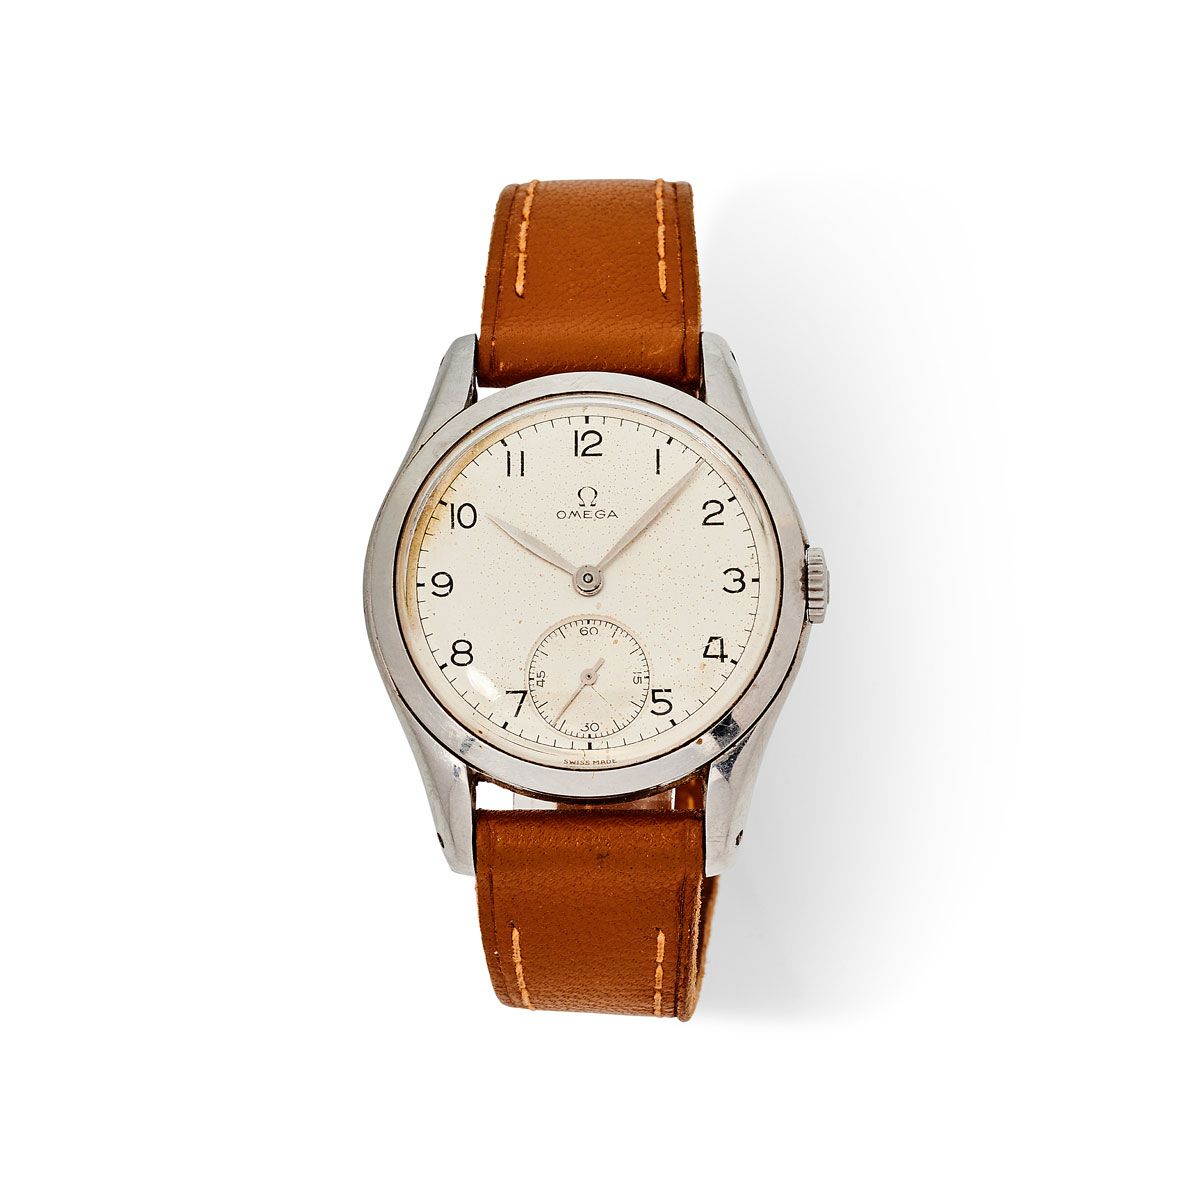 Null Omega, Ref. 2503-2, mvt. No. 11322609, circa 1950.

Un hermoso reloj clásic&hellip;